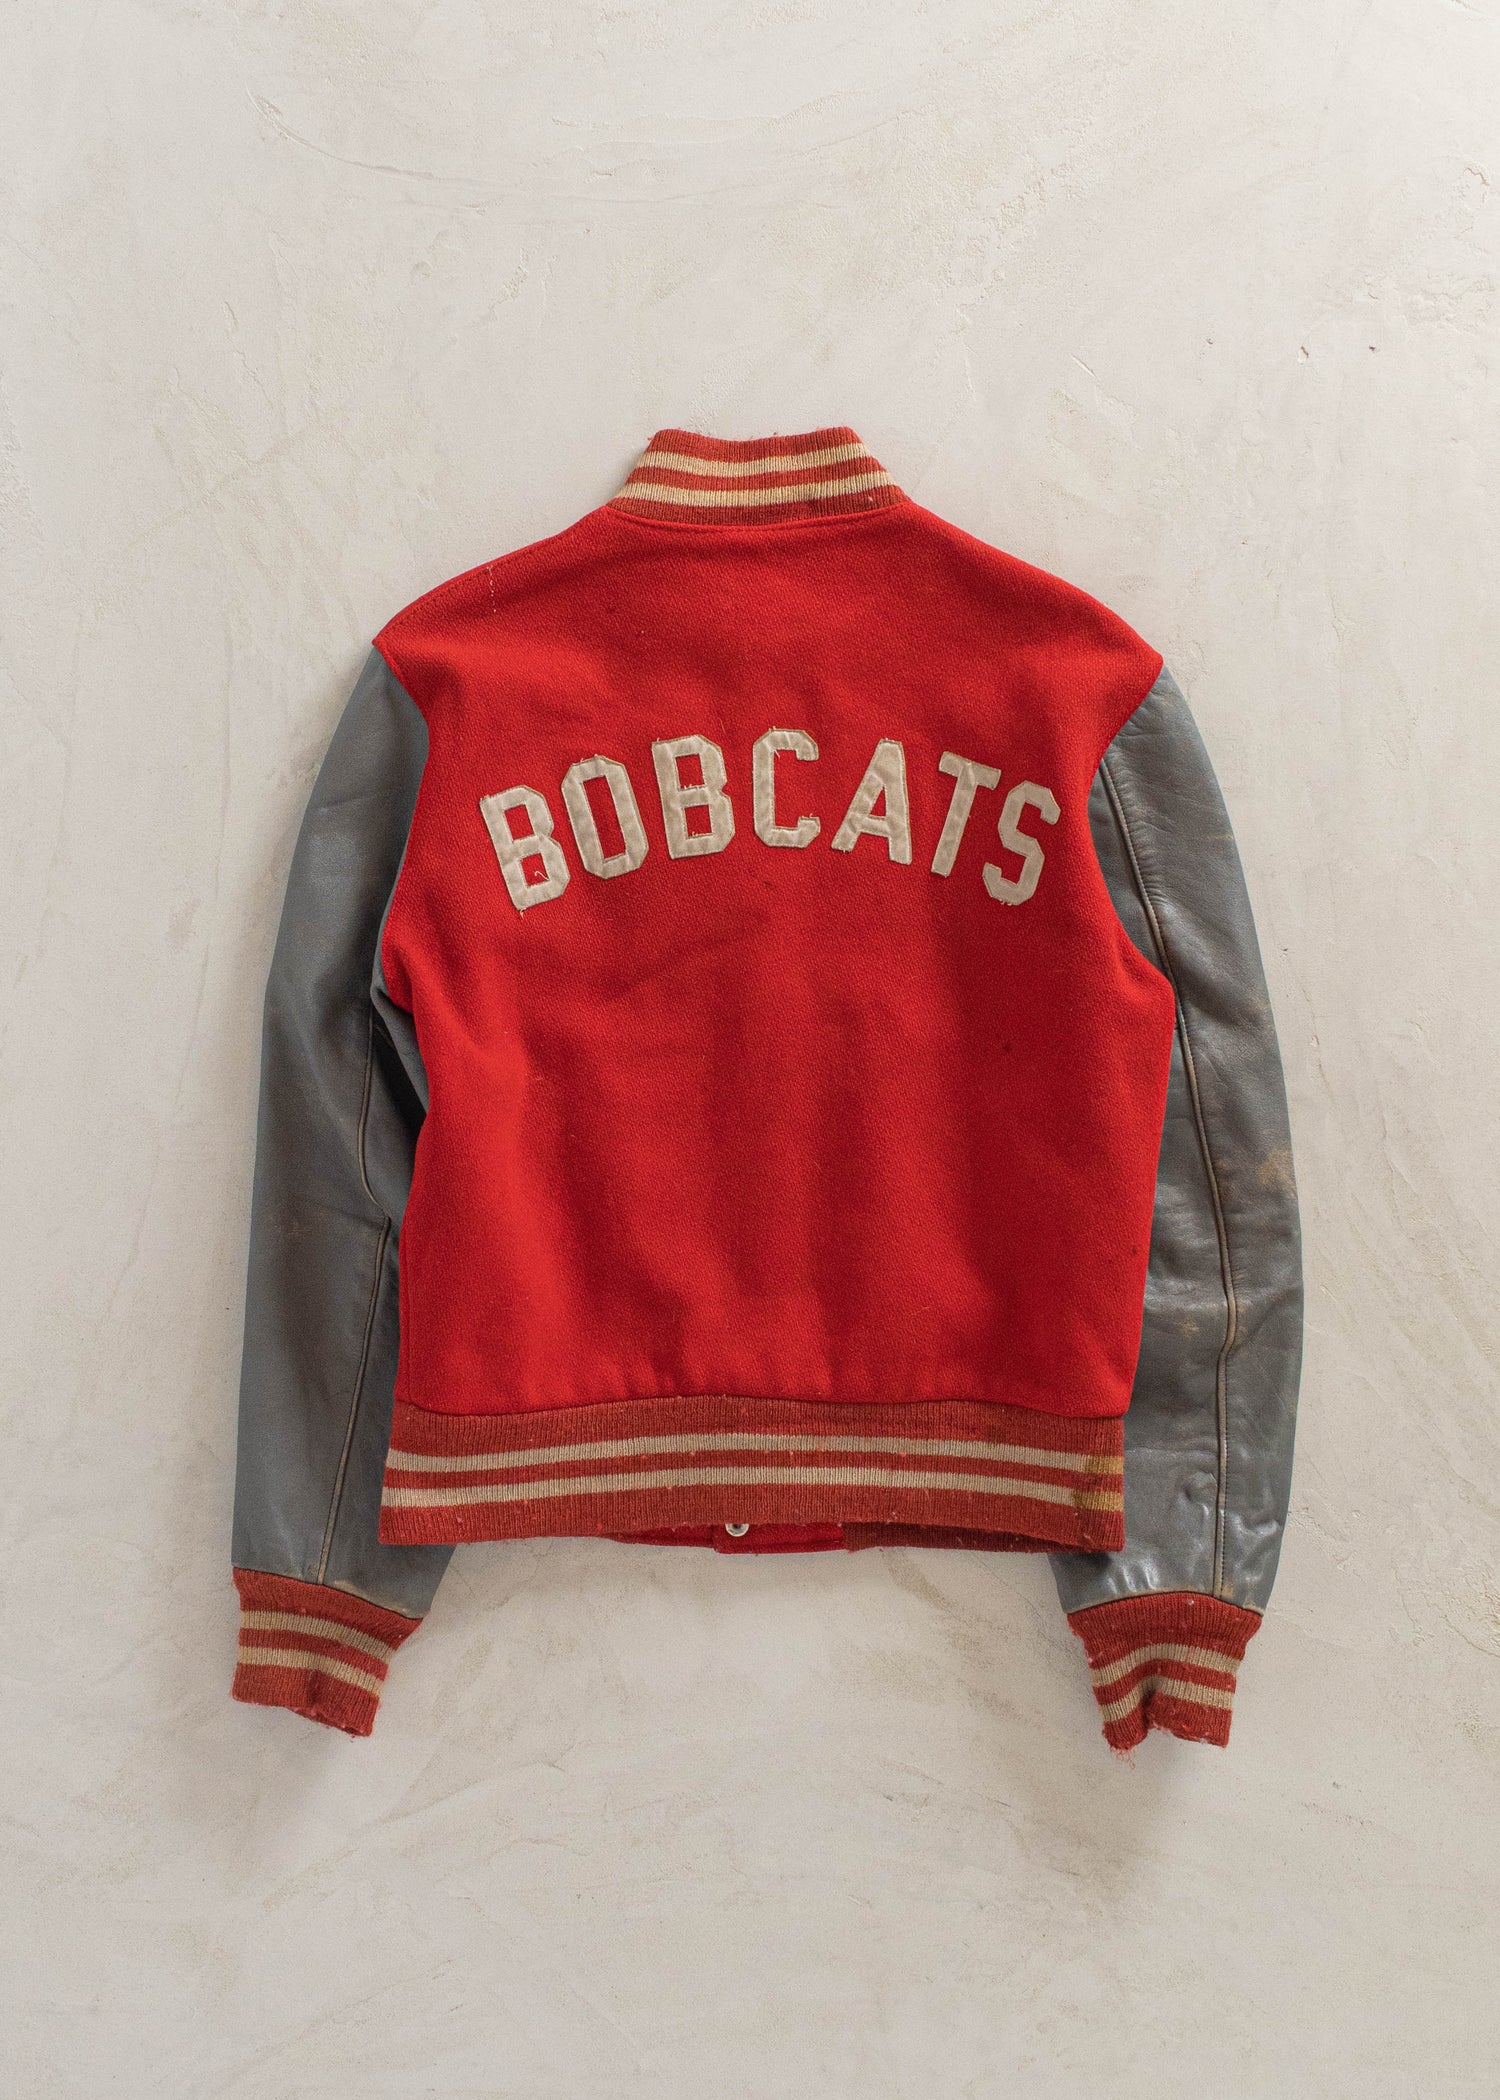 1980s Reed Sportswear Bobcats Varsity Jacket Size S/M – Palmo Goods